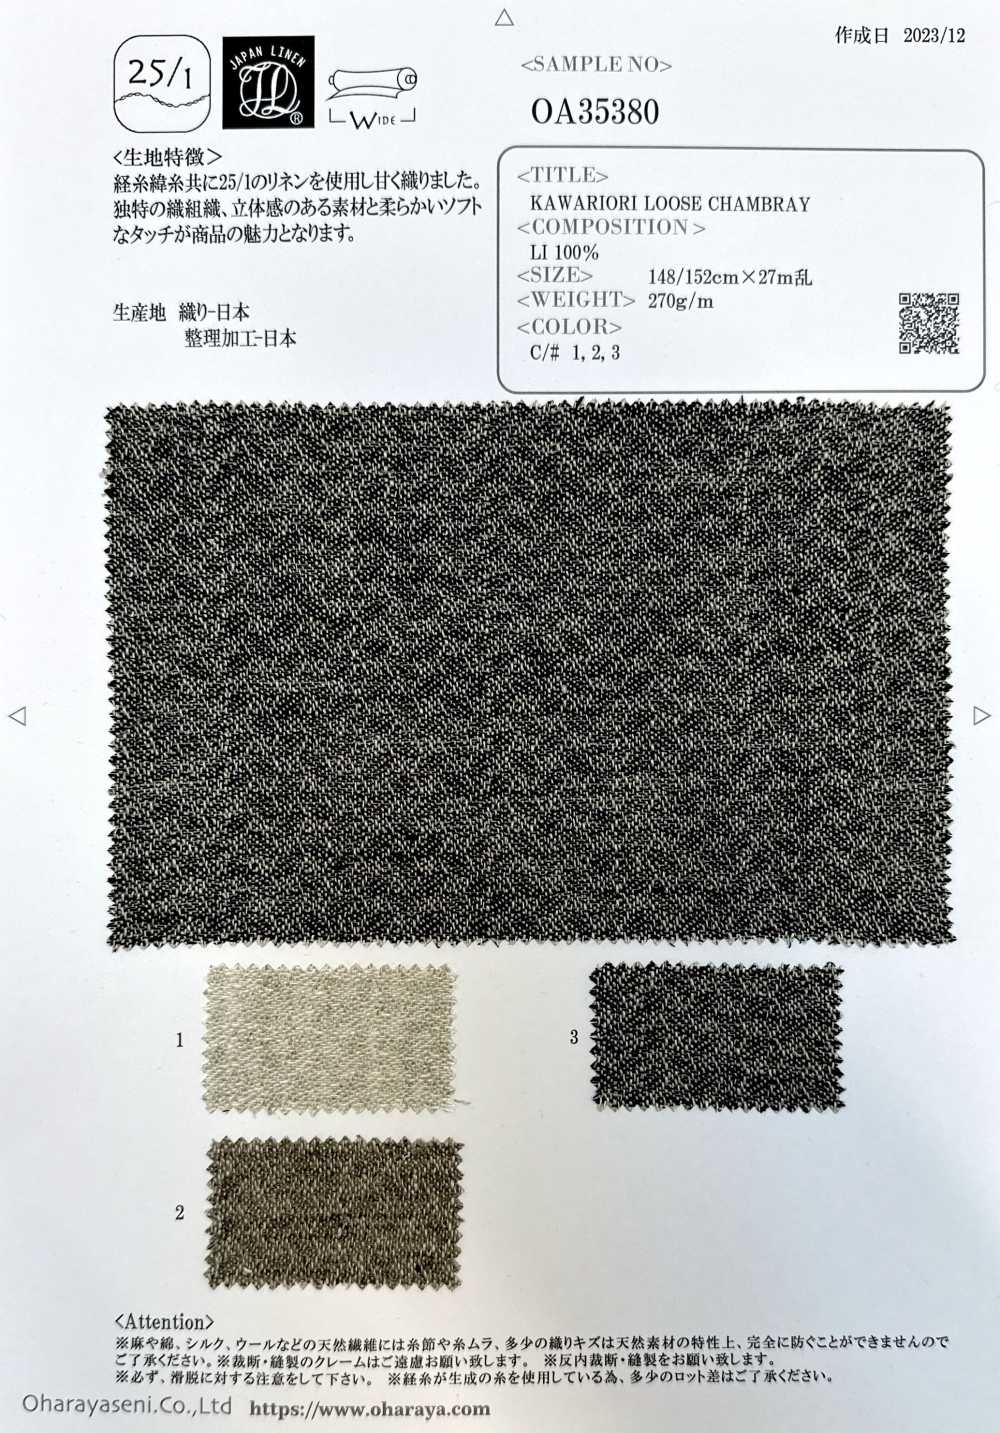 OA35380 CHAMBRAY SUELTO KAWARIORI[Fabrica Textil] Oharayaseni